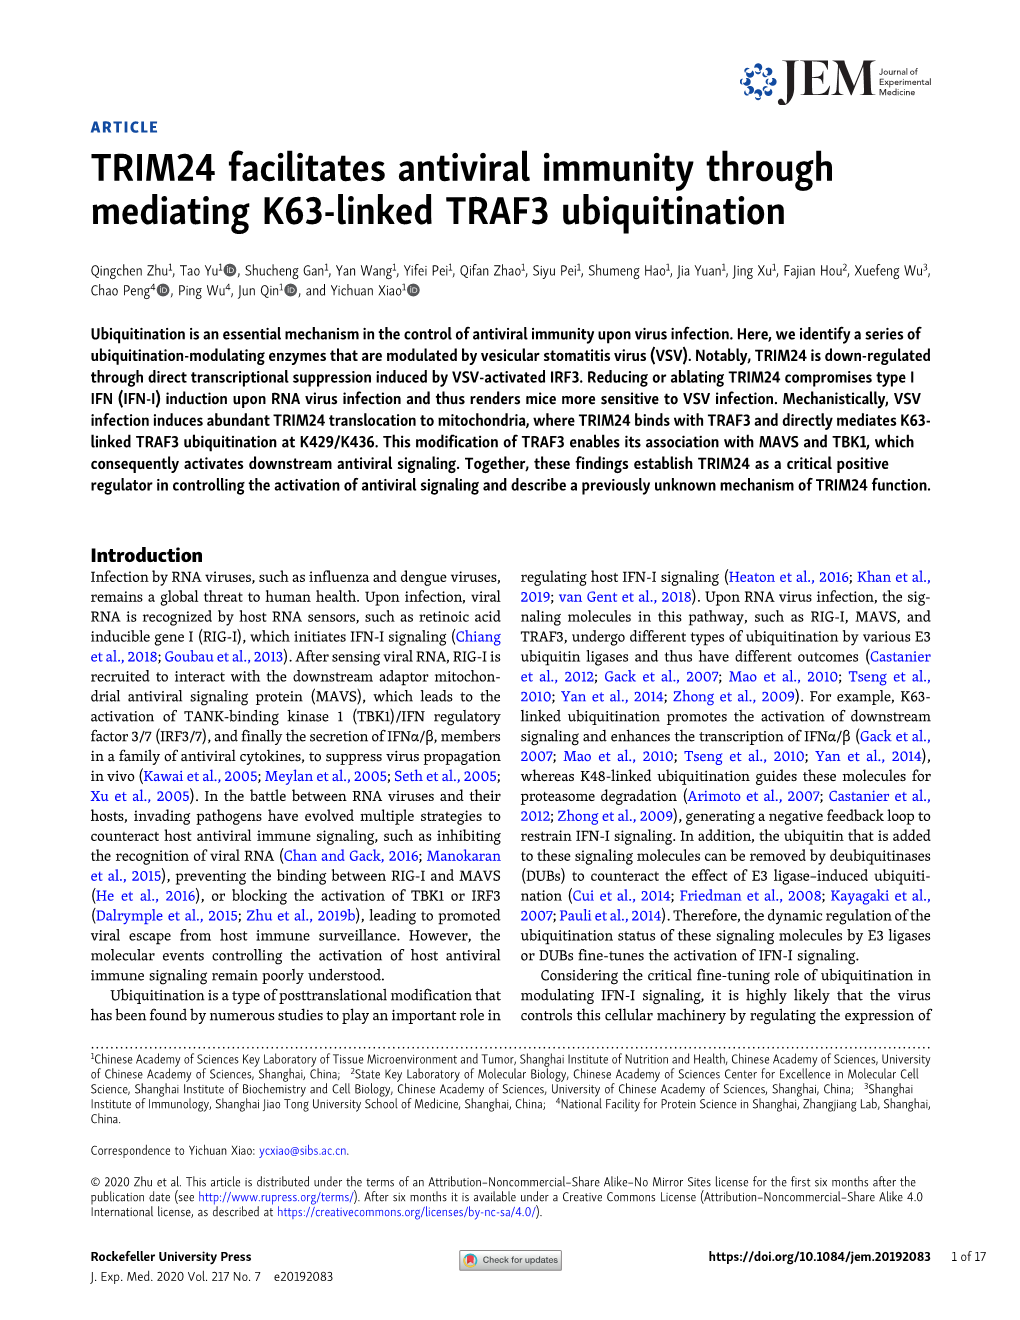 TRIM24 Facilitates Antiviral Immunity Through Mediating K63-Linked TRAF3 Ubiquitination